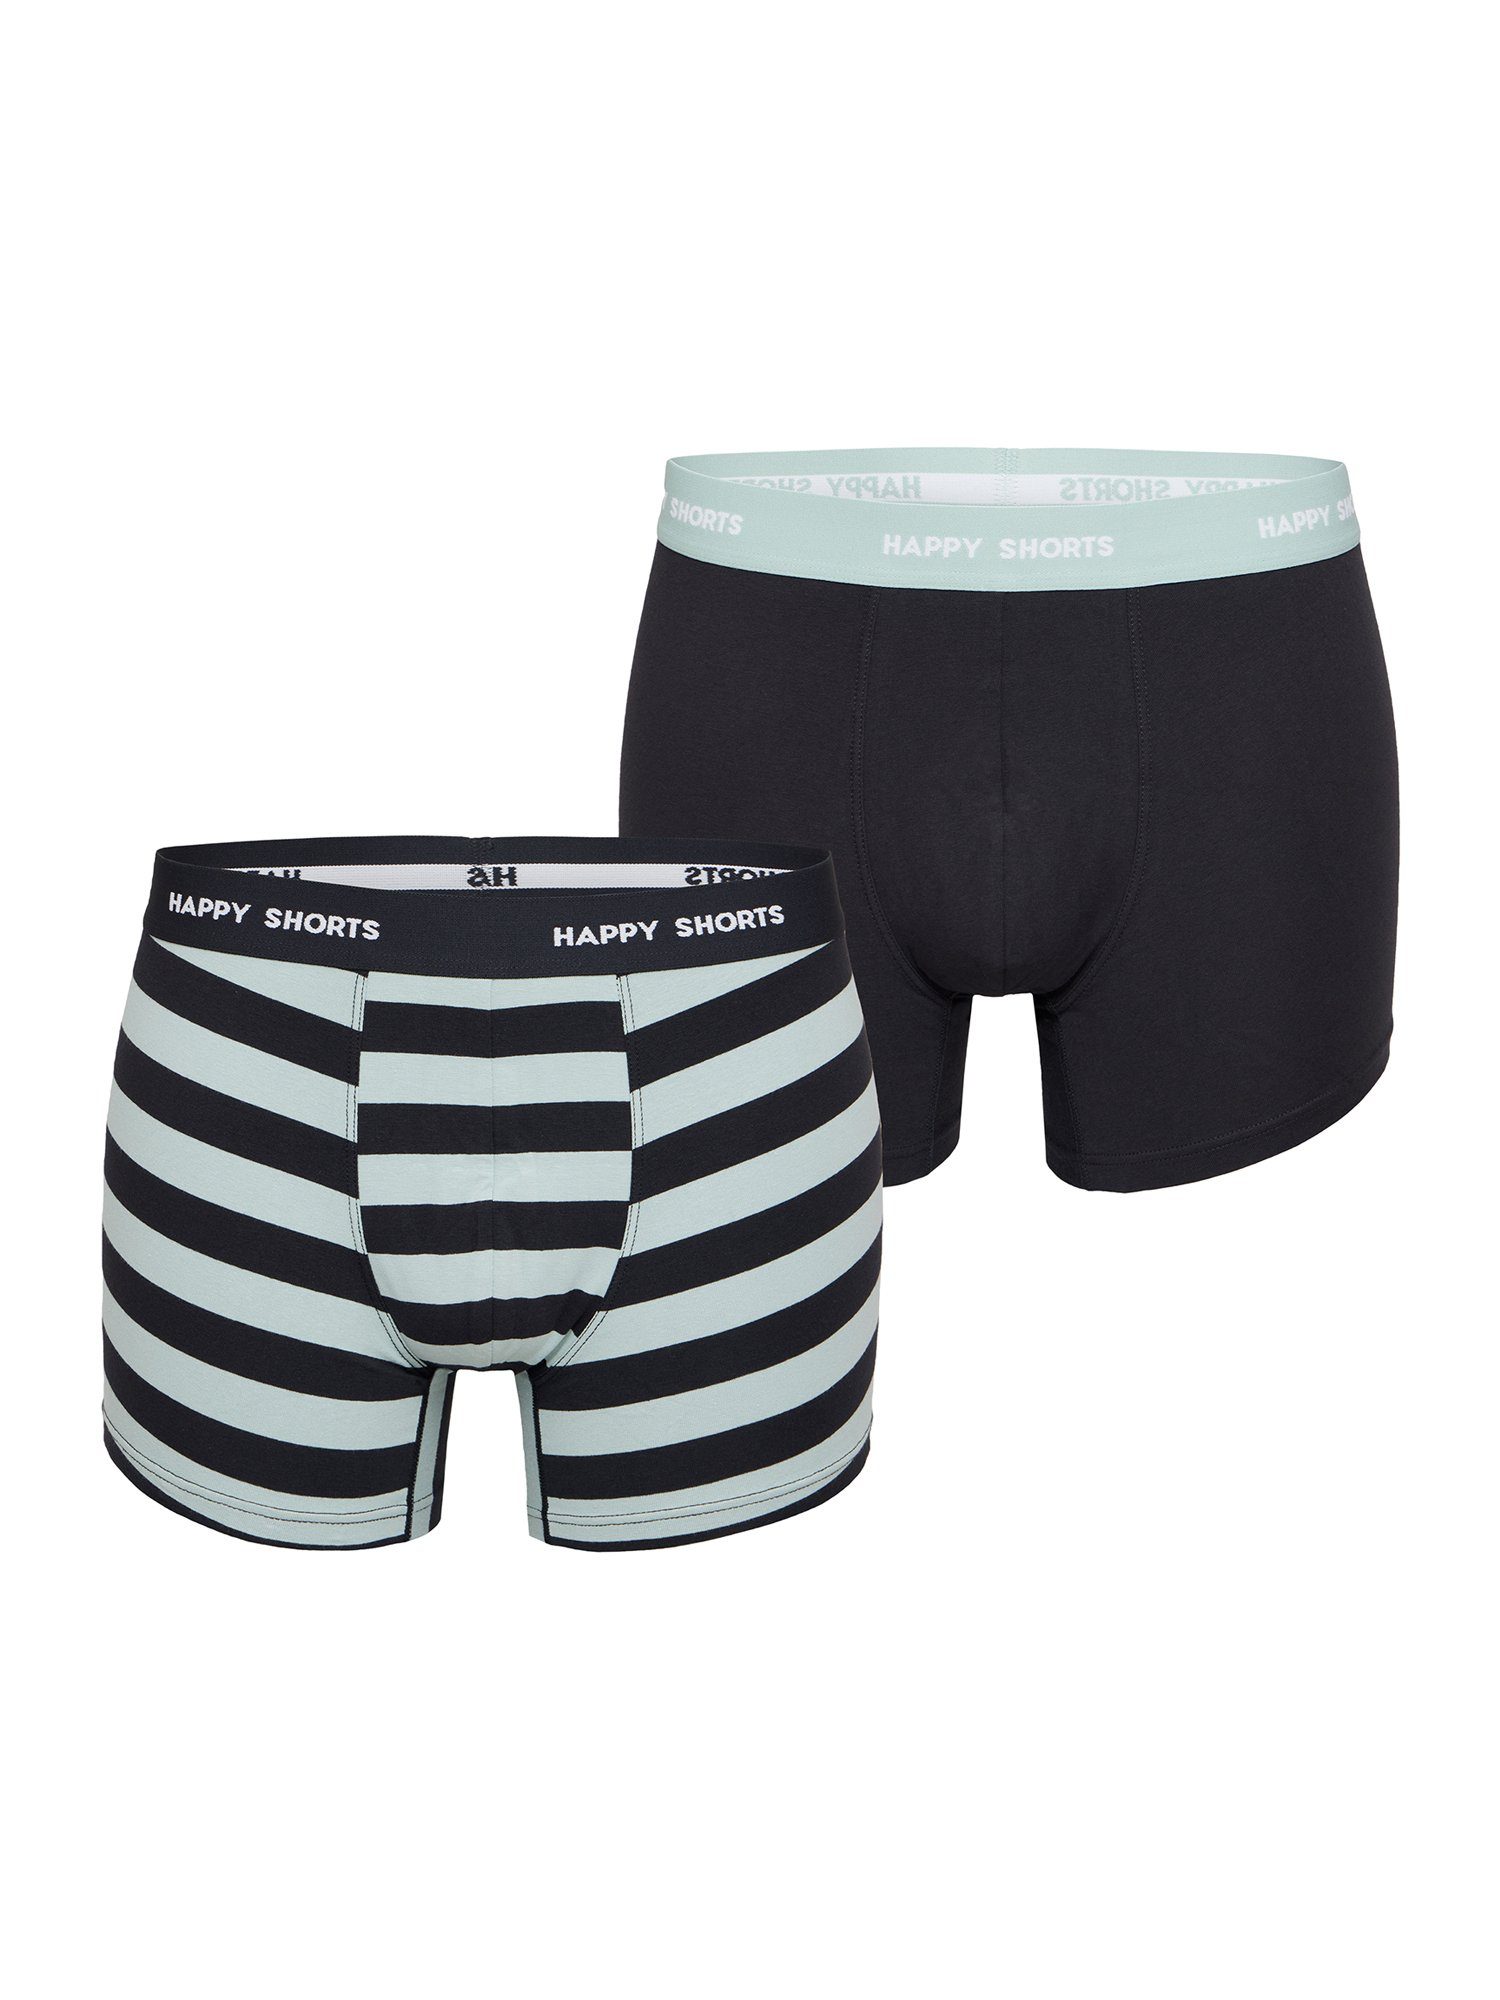 HAPPY SHORTS Retro Pants Trunks (2-St) Retro-Boxer Retro-shorts unterhose Dusty Mint Blockstripe | Unterhosen